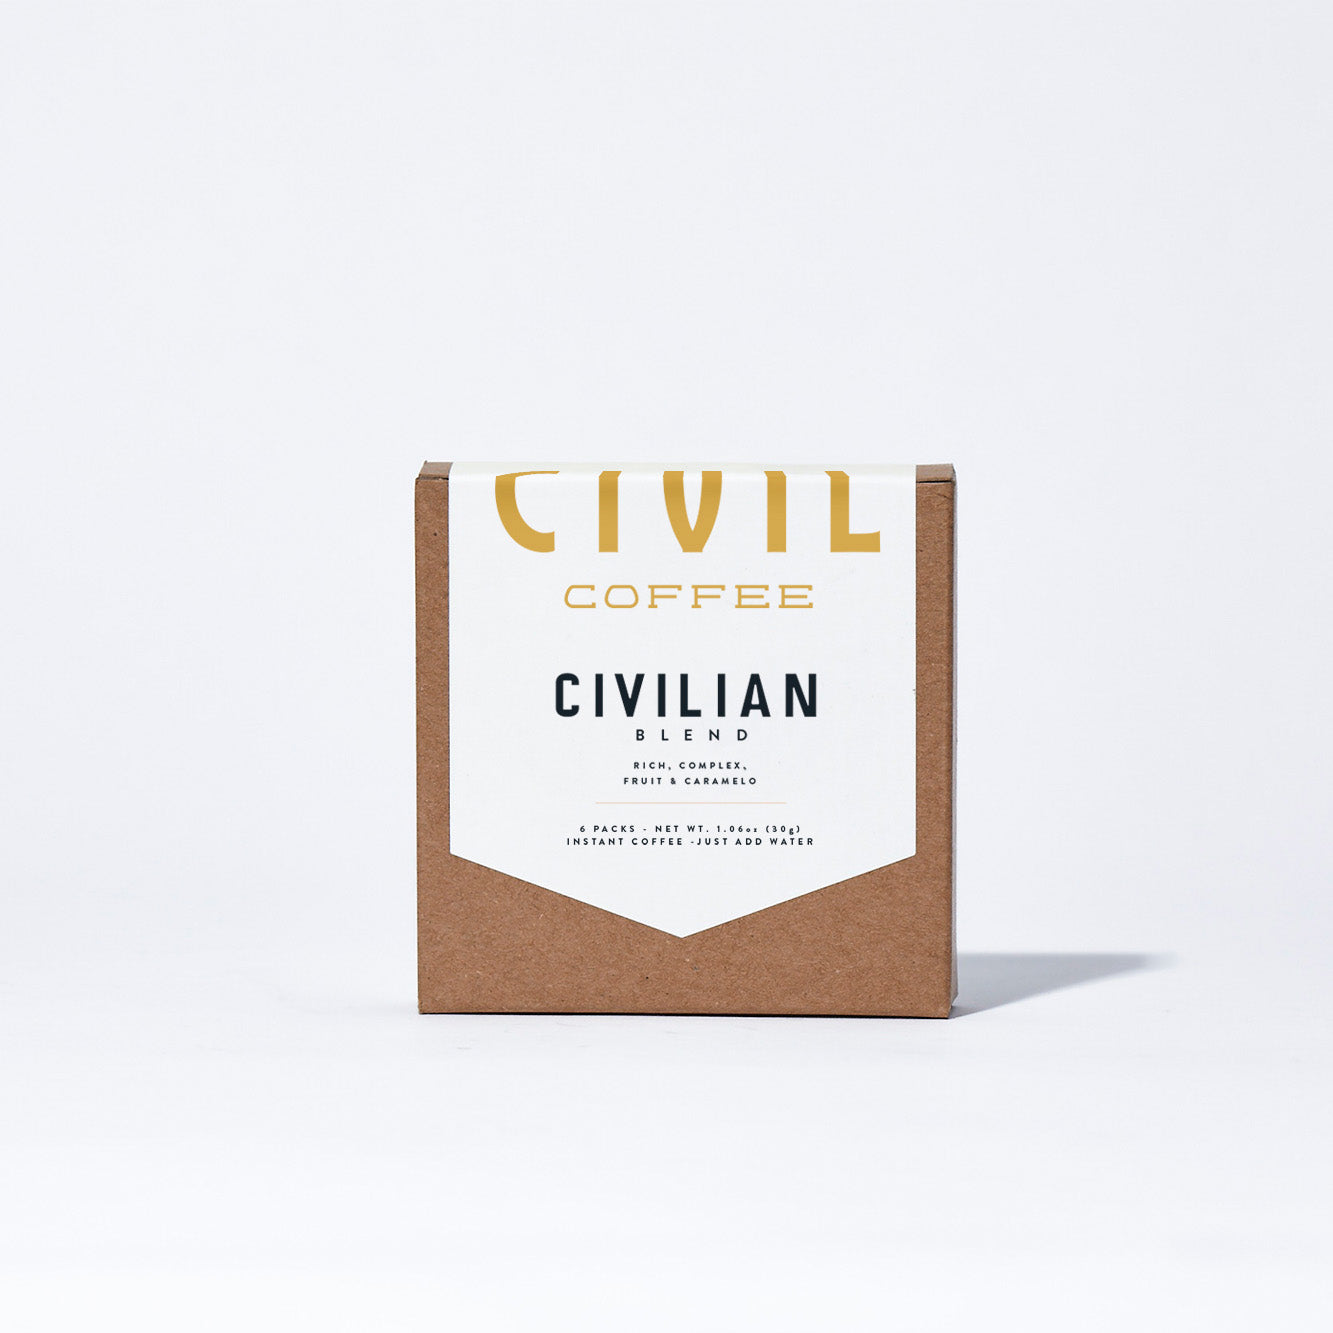 Civilian - Instant Craft Coffee - Civil Coffee Store